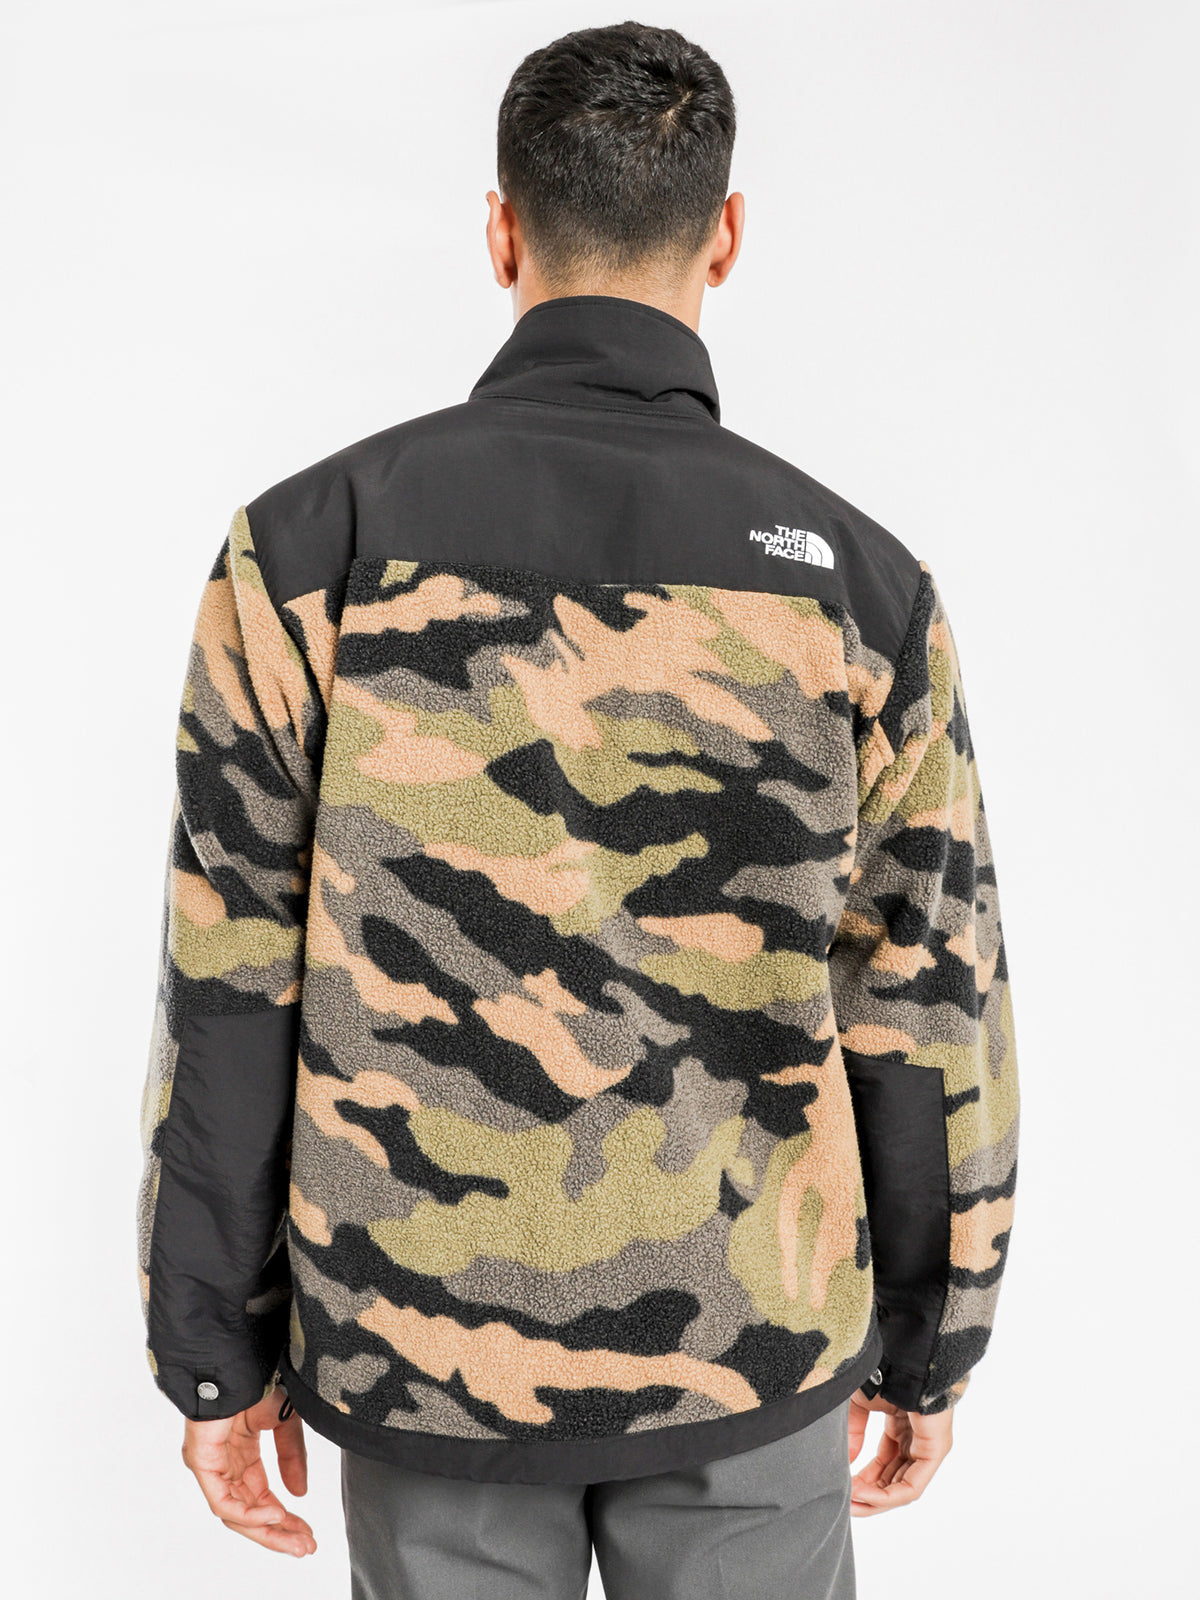 95 Retro Denali Jacket in Camouflage